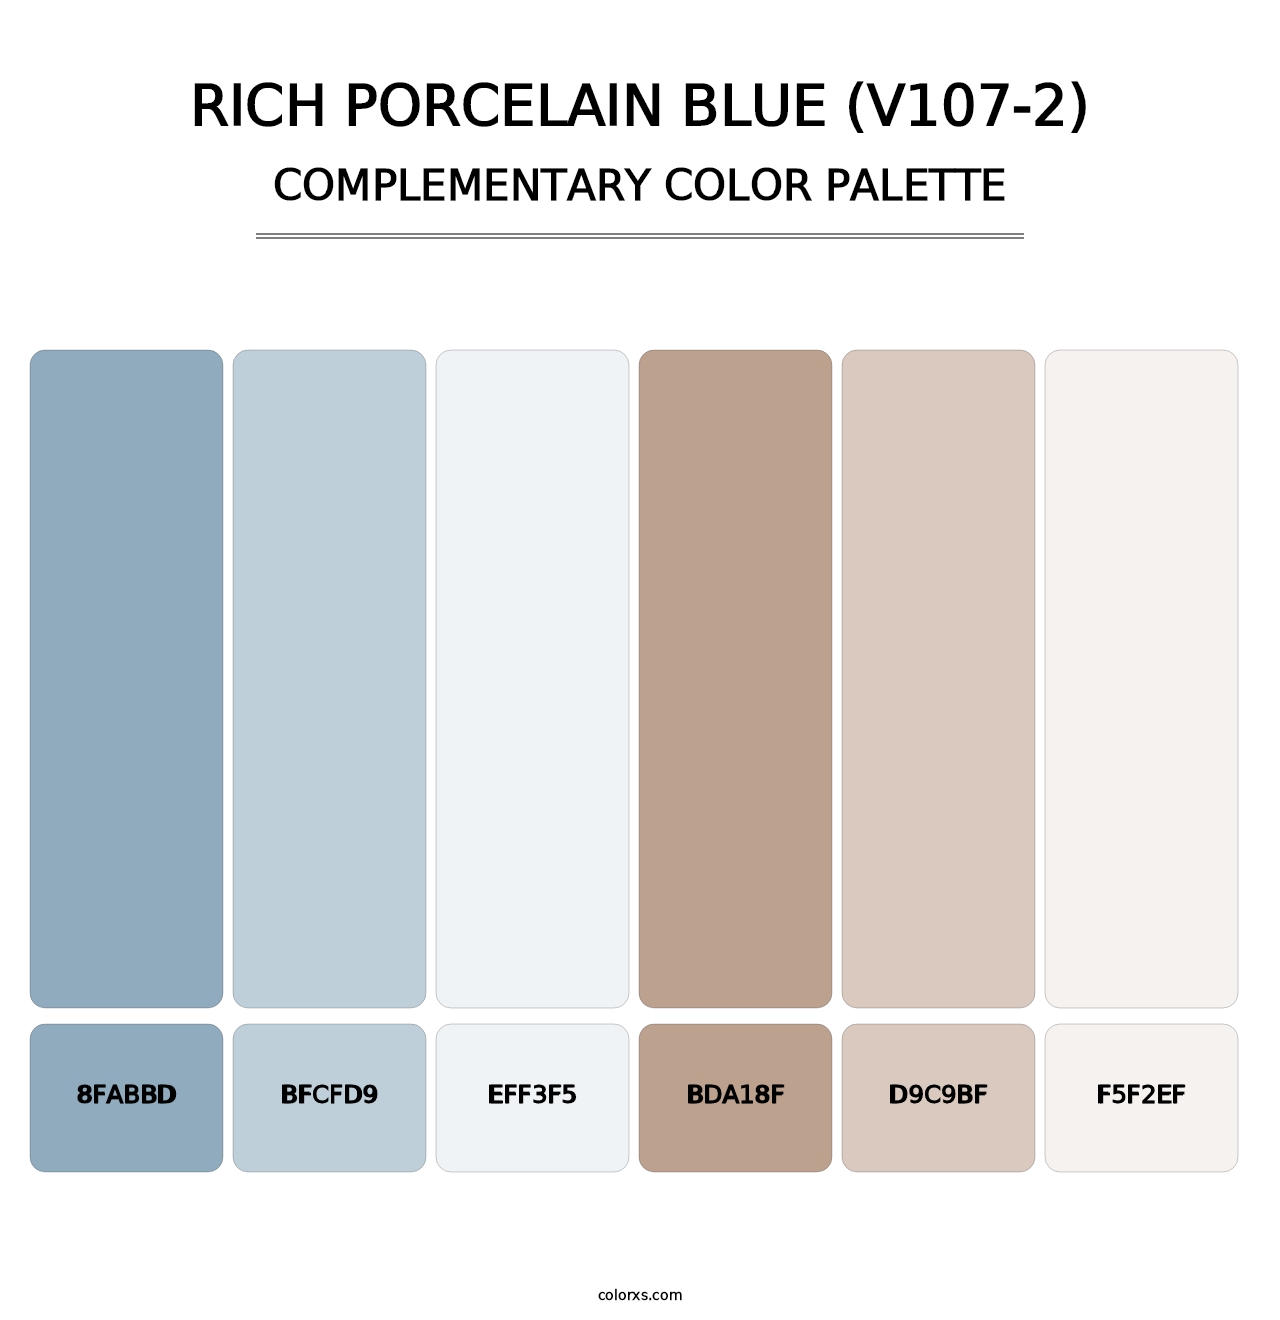 Rich Porcelain Blue (V107-2) - Complementary Color Palette